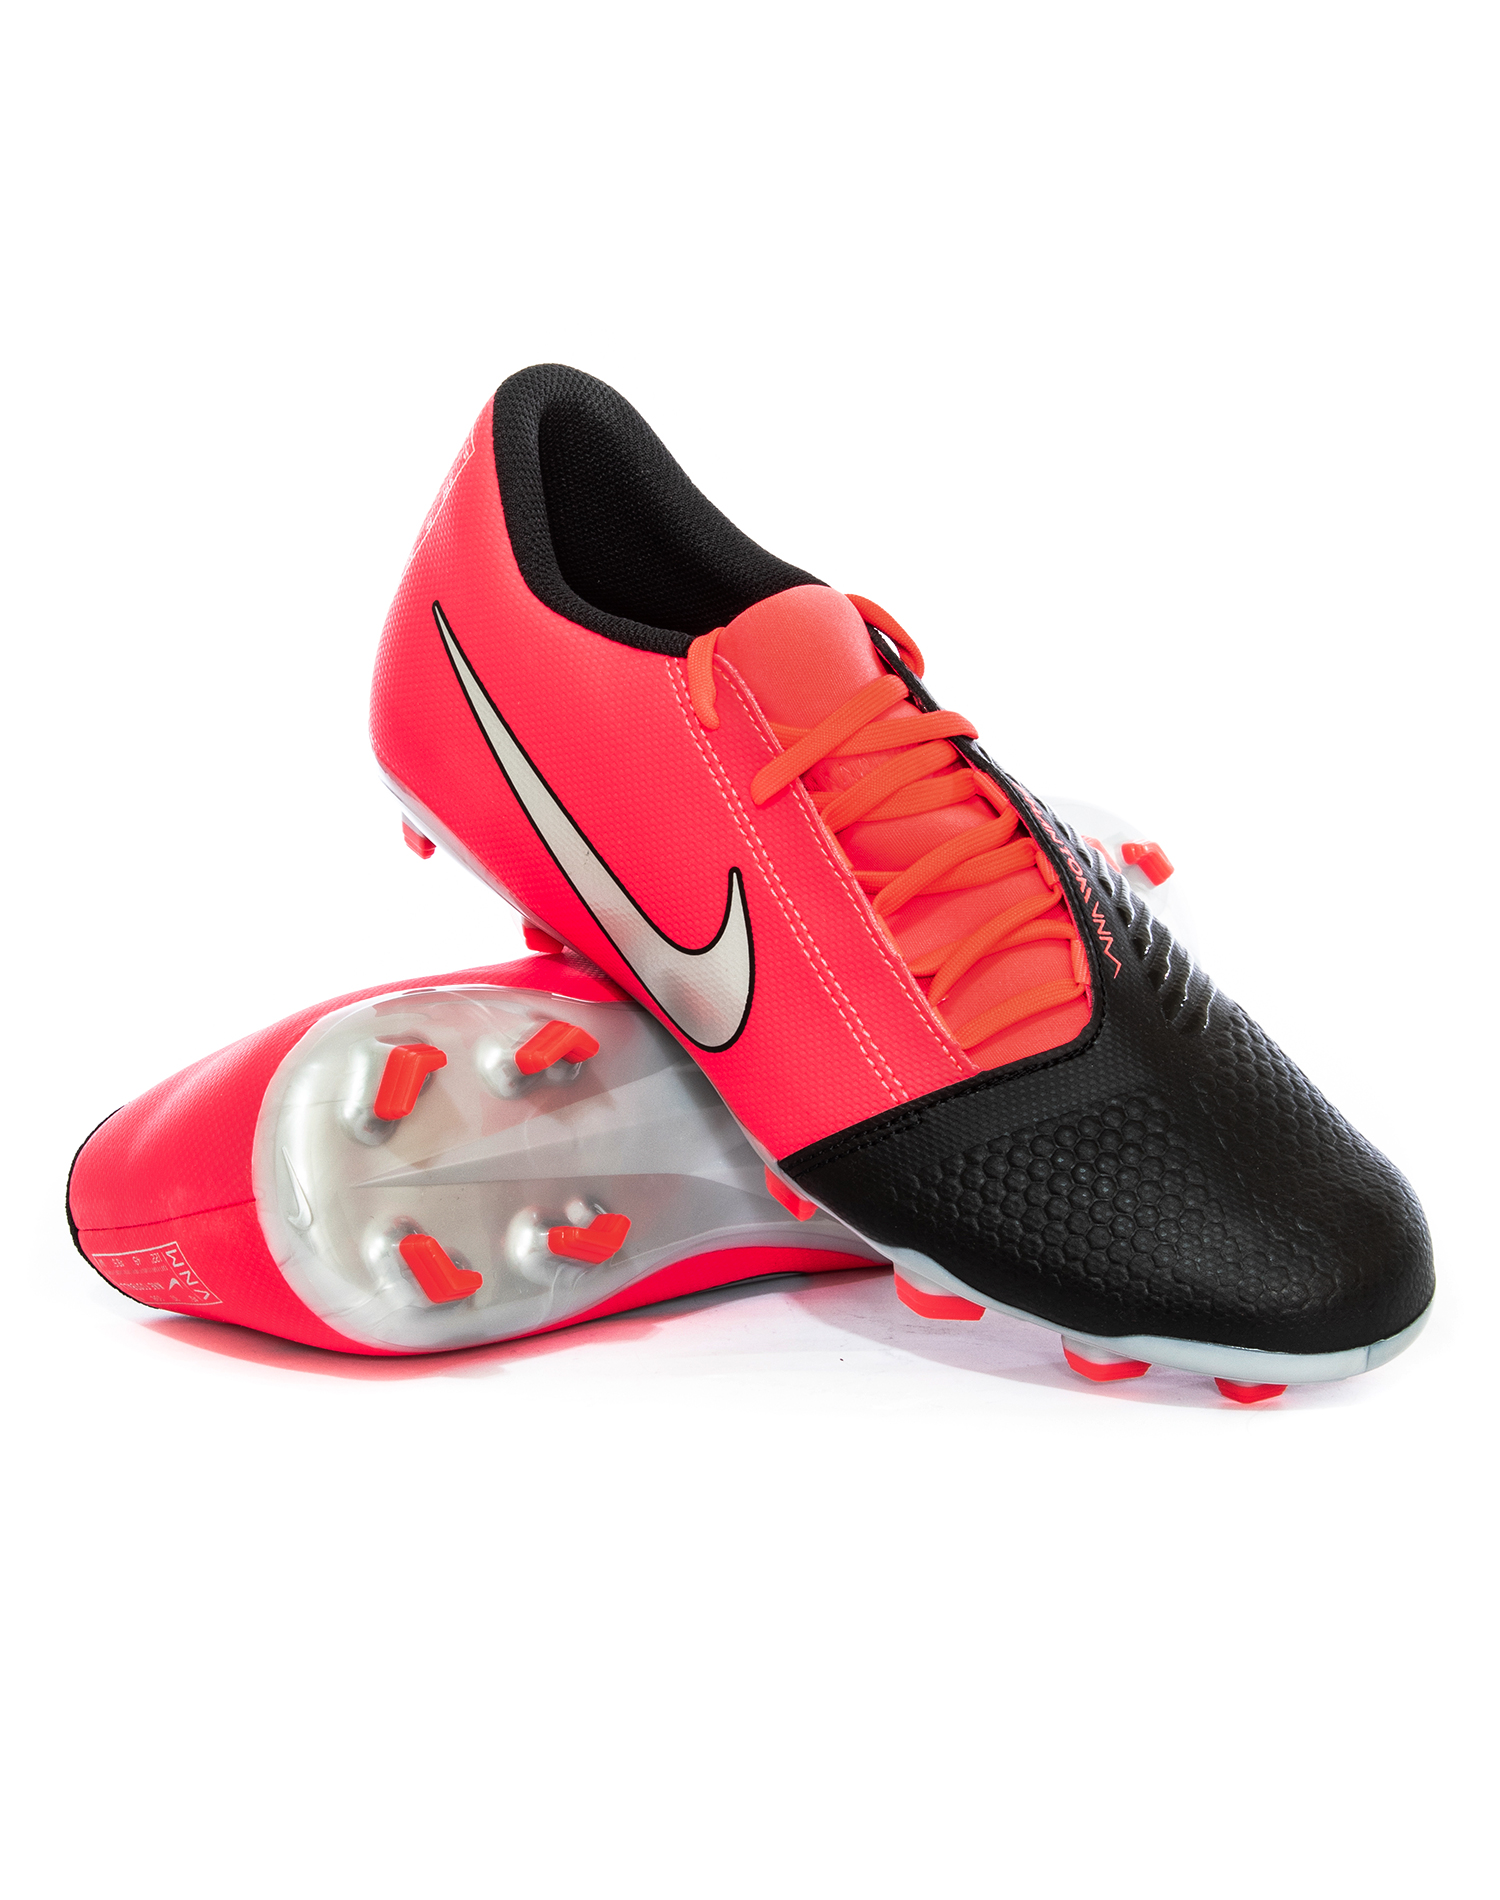 Zapatos Futbol Nike Phantom Venom Club FG - Golero Sport